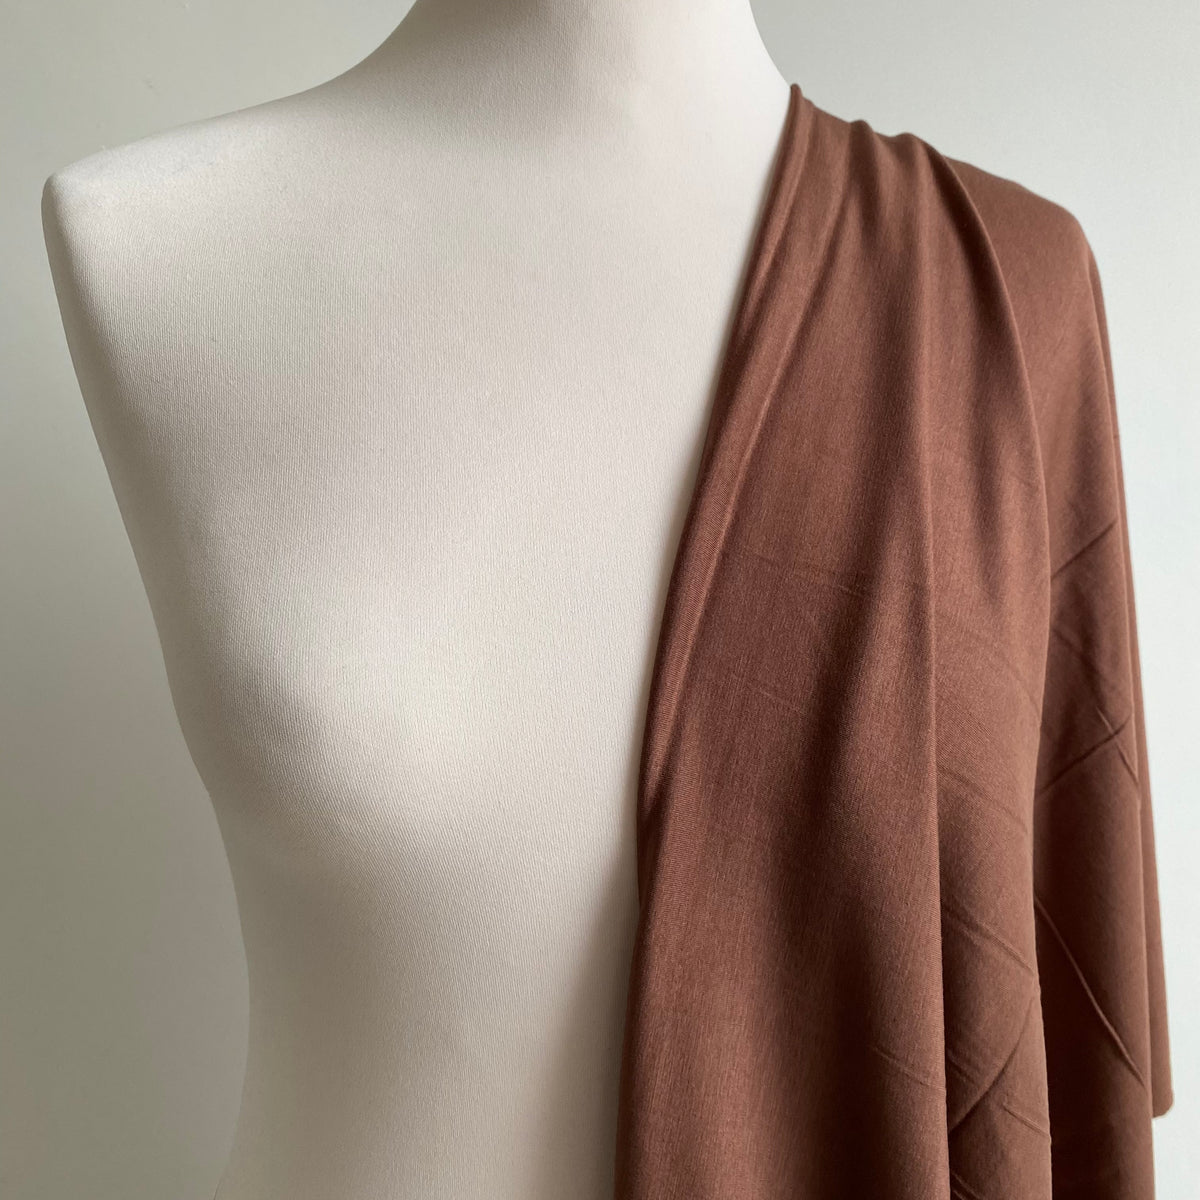 Bamboo Jersey Fabric - Chocolate Brown - Priced per 0.5 metre